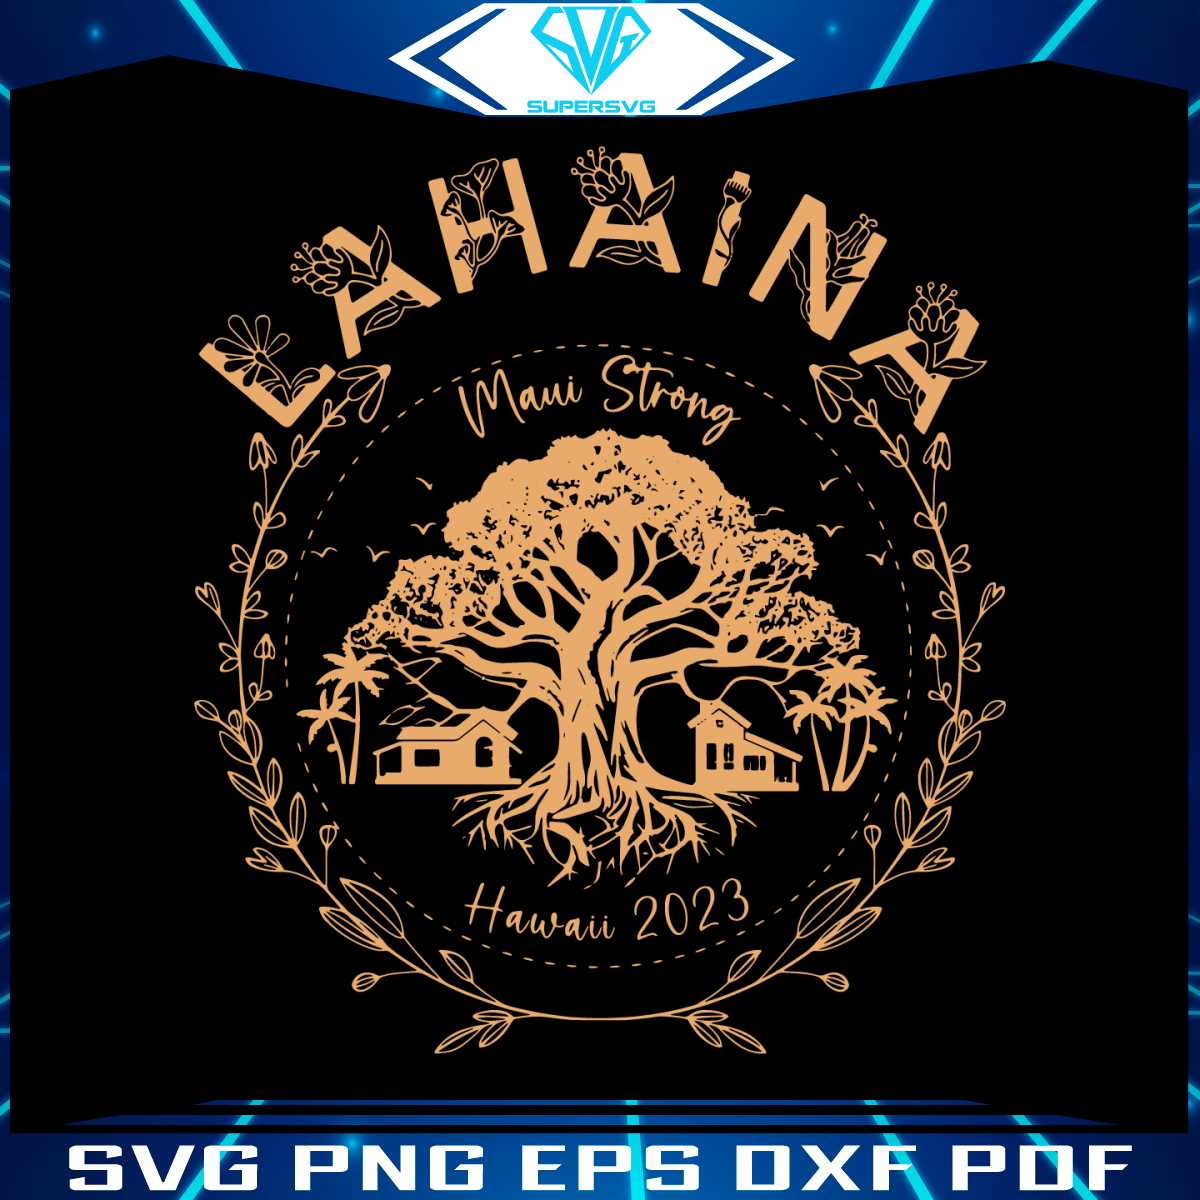 lahaina-maui-support-strong-hawaii-2023-svg-digital-file